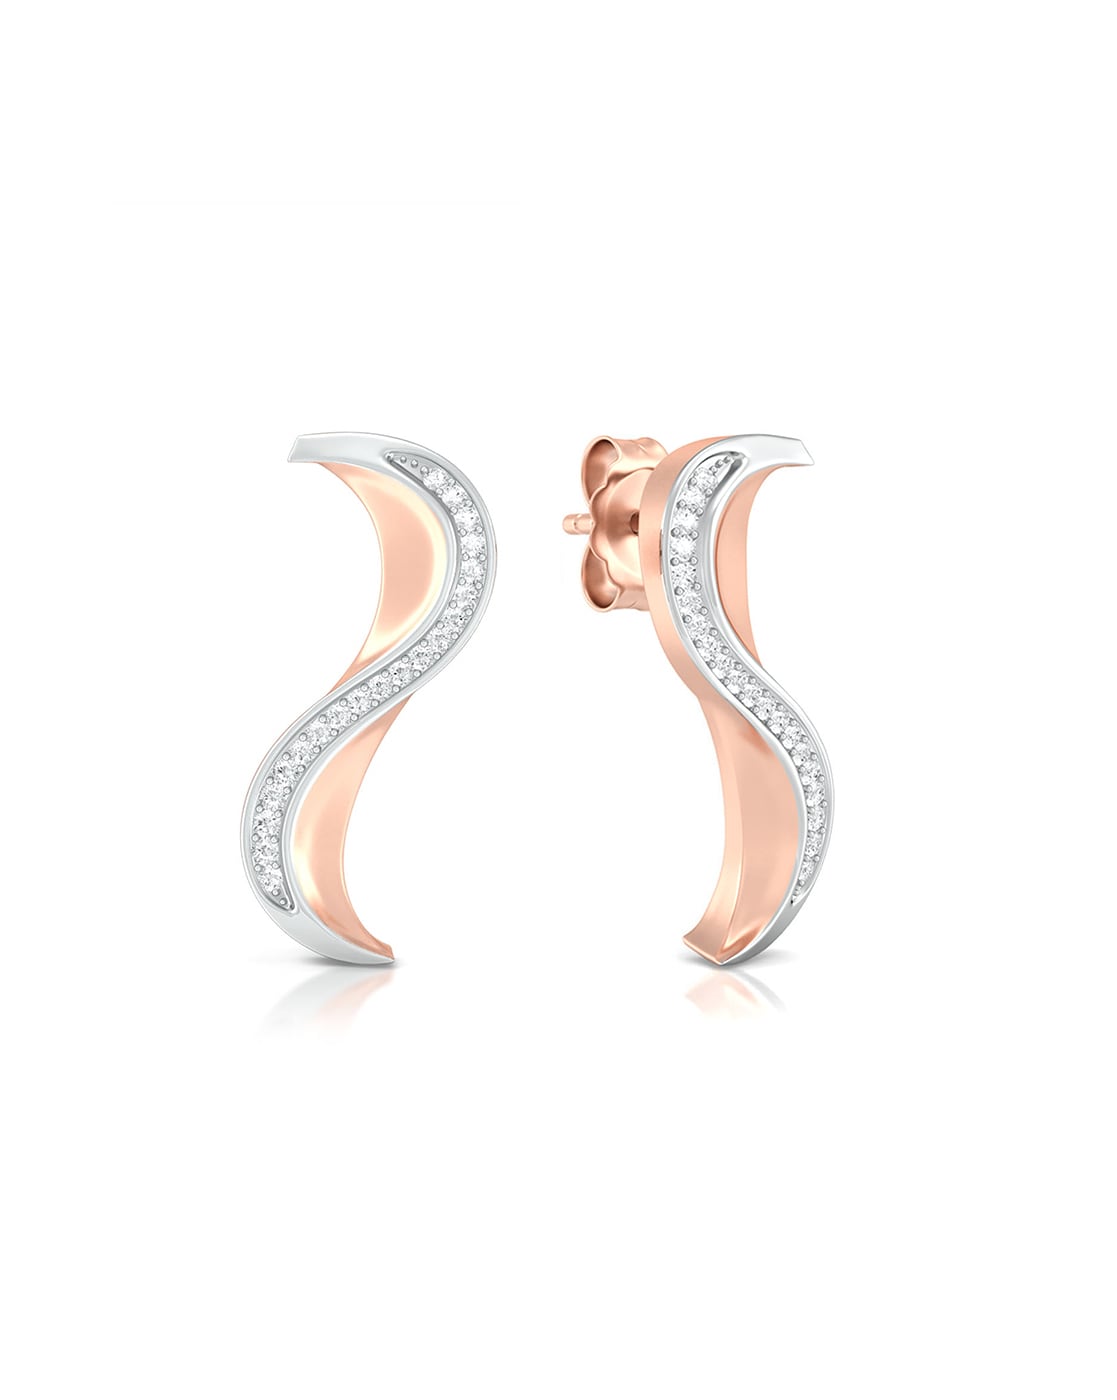 Pt950 Platinum Earrings Women's 18K Platinum Earrings Earrings Lucky Clover  Simple Authentic Jewelry